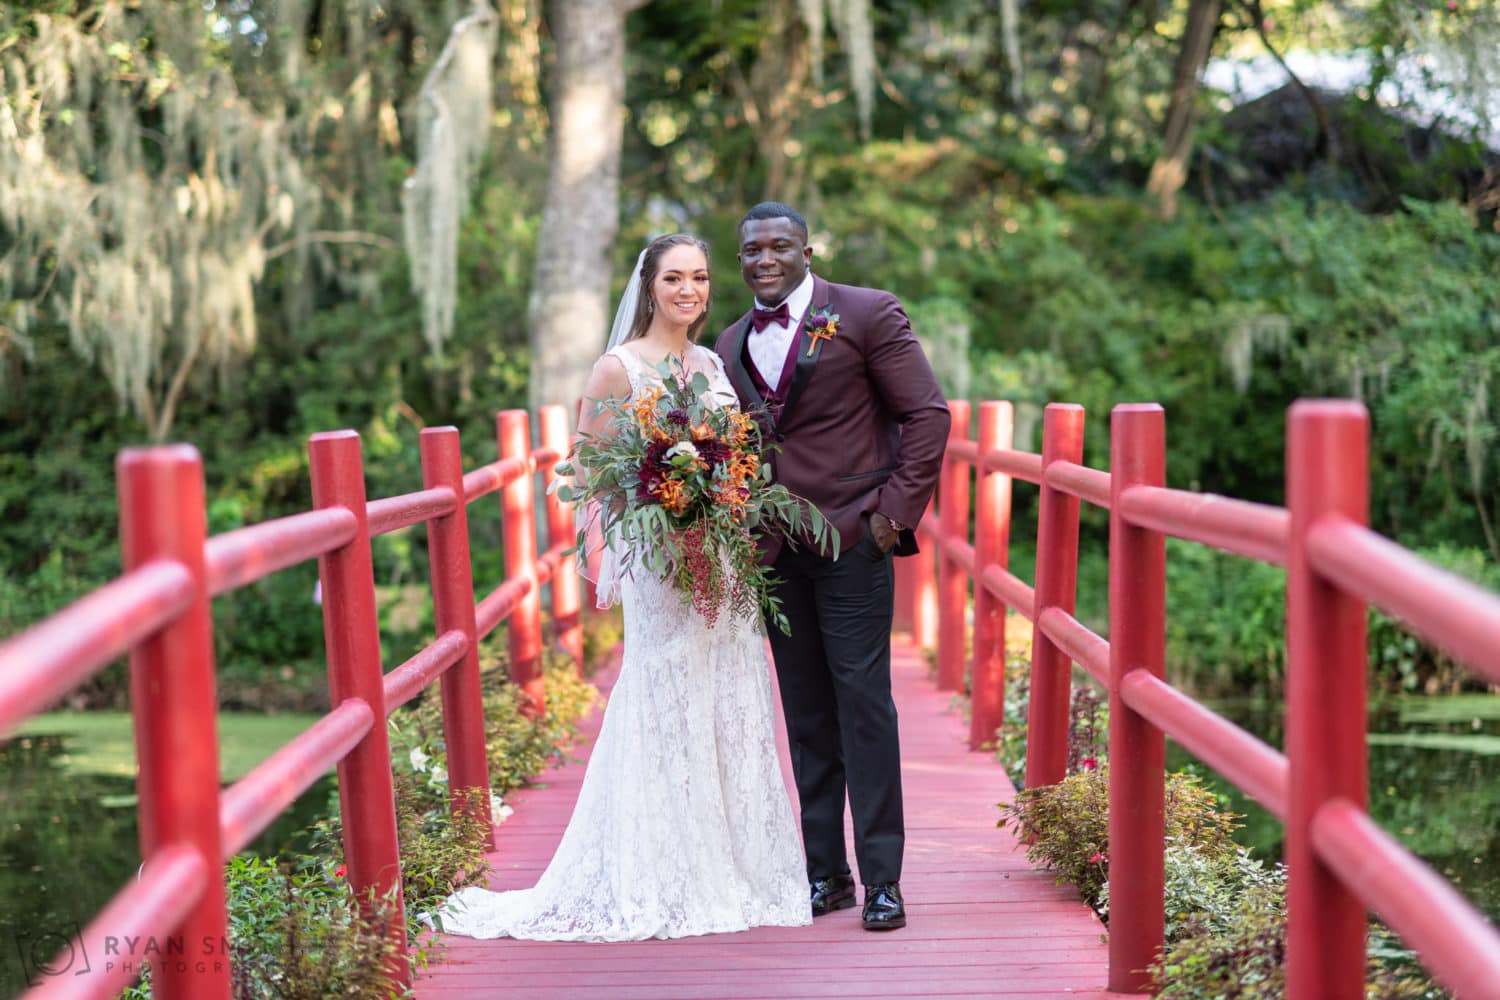 Portraits of bride and groom on the red bridge - Magnolia Plantation - Charleston, SC